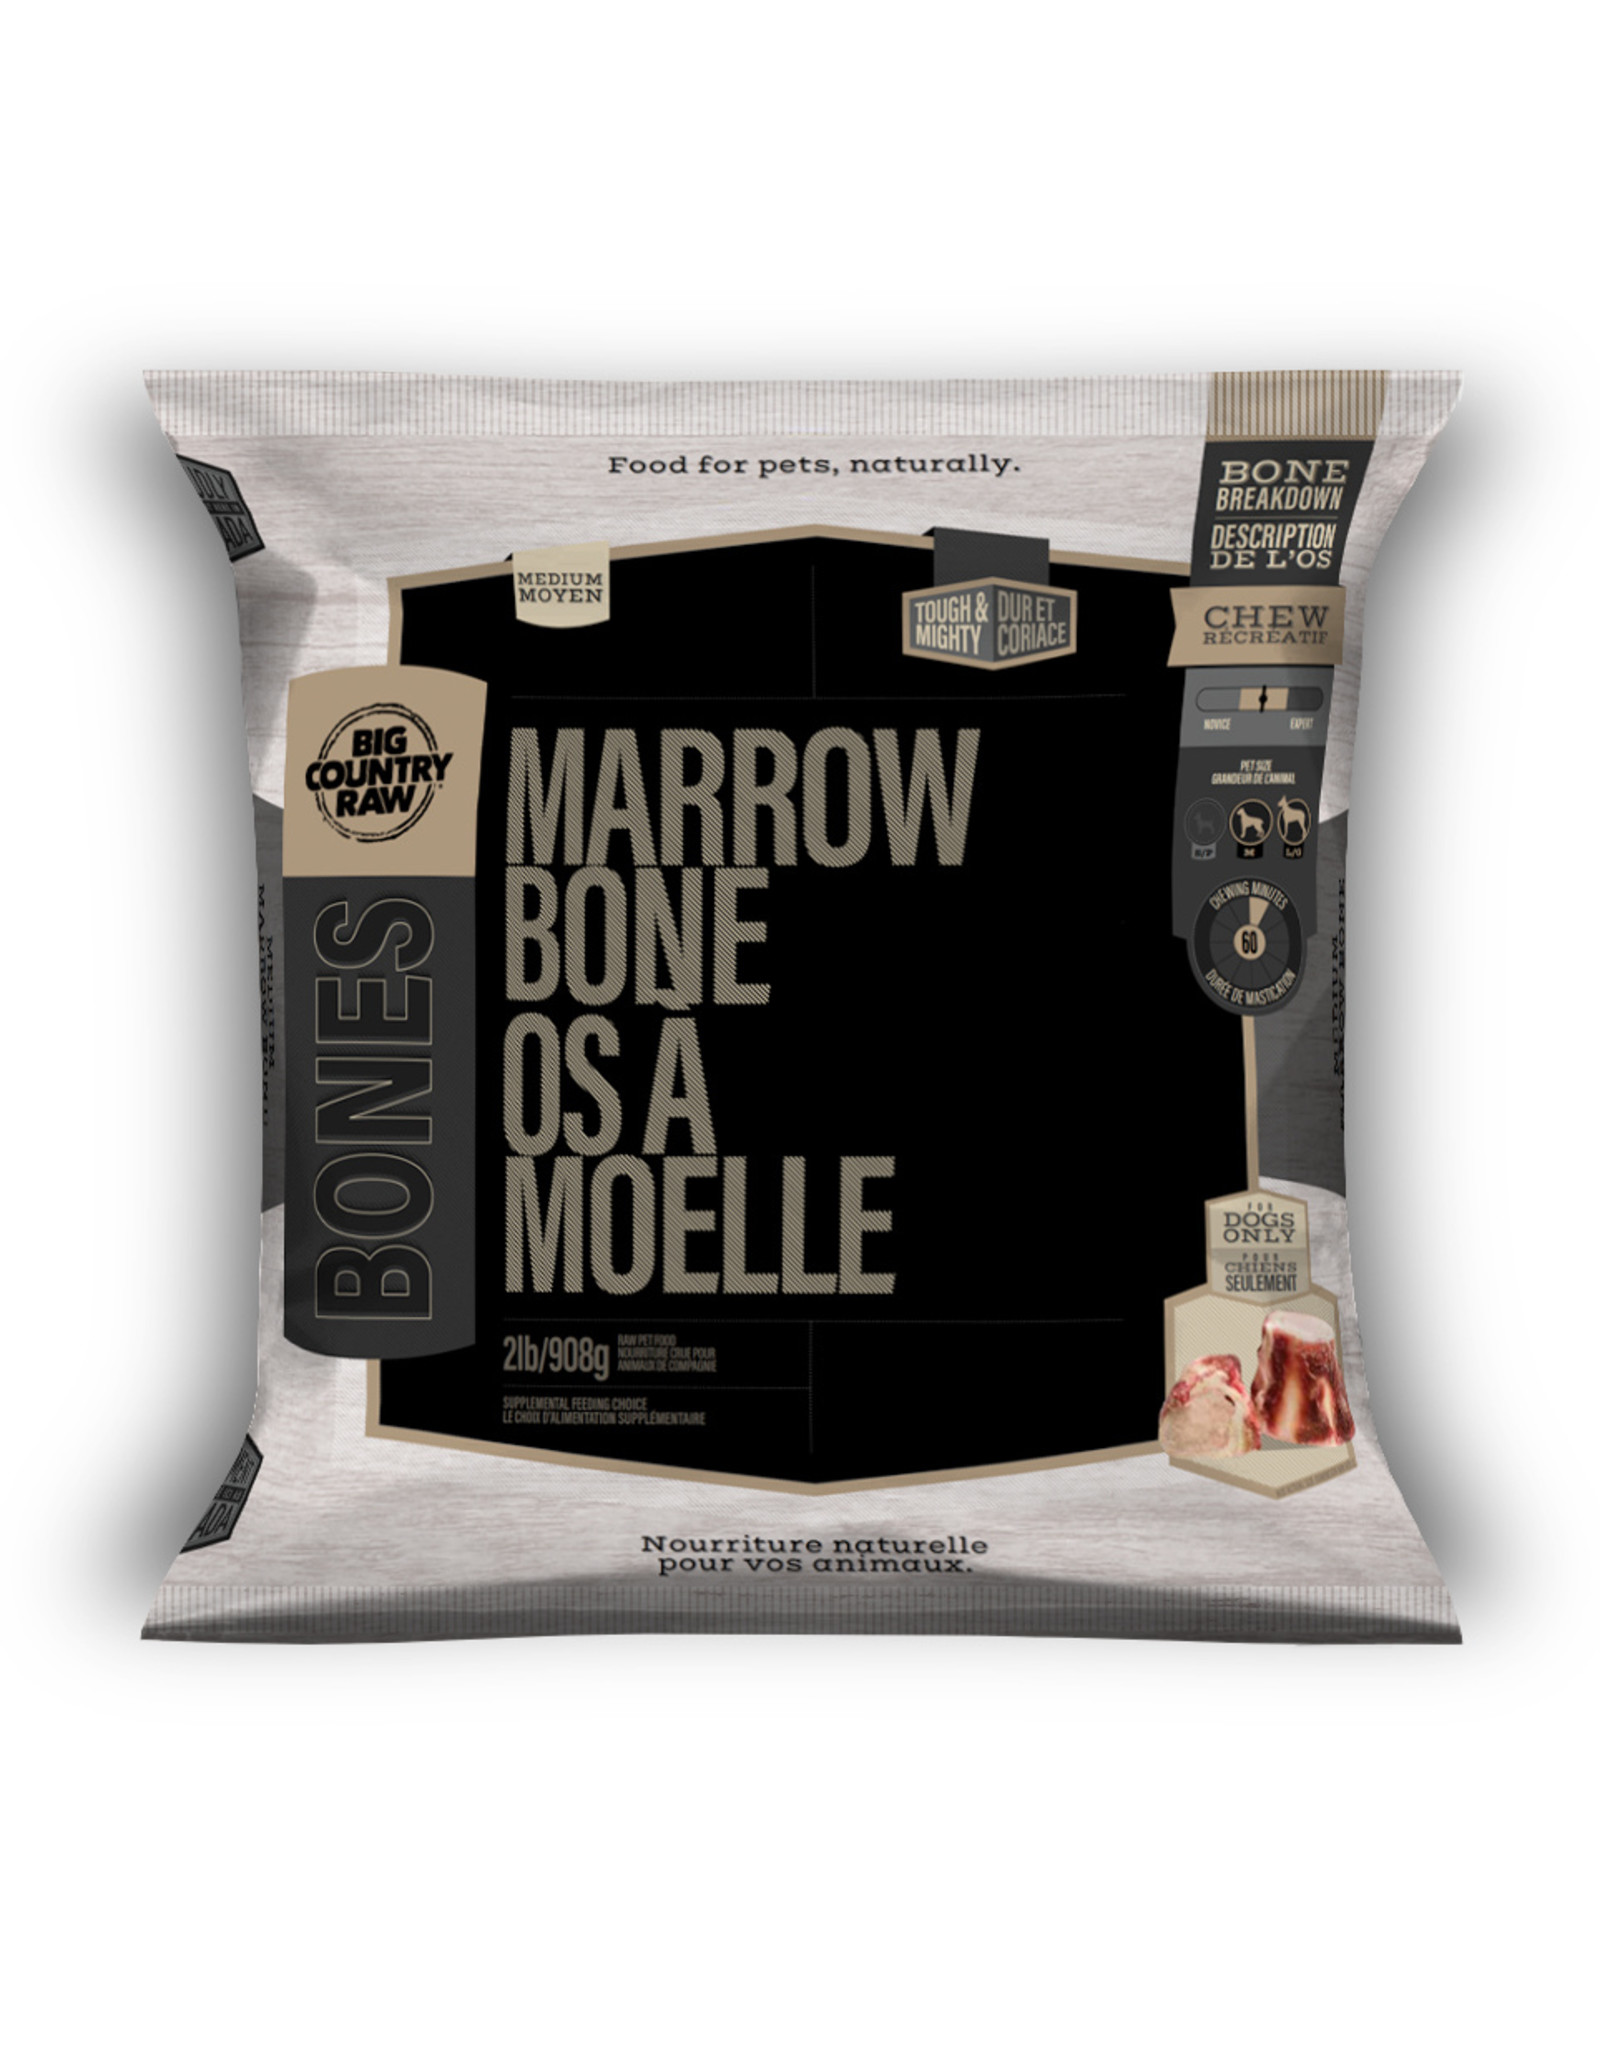 Big Country Raw Beef Marrow Bone Medium 2lb Bag